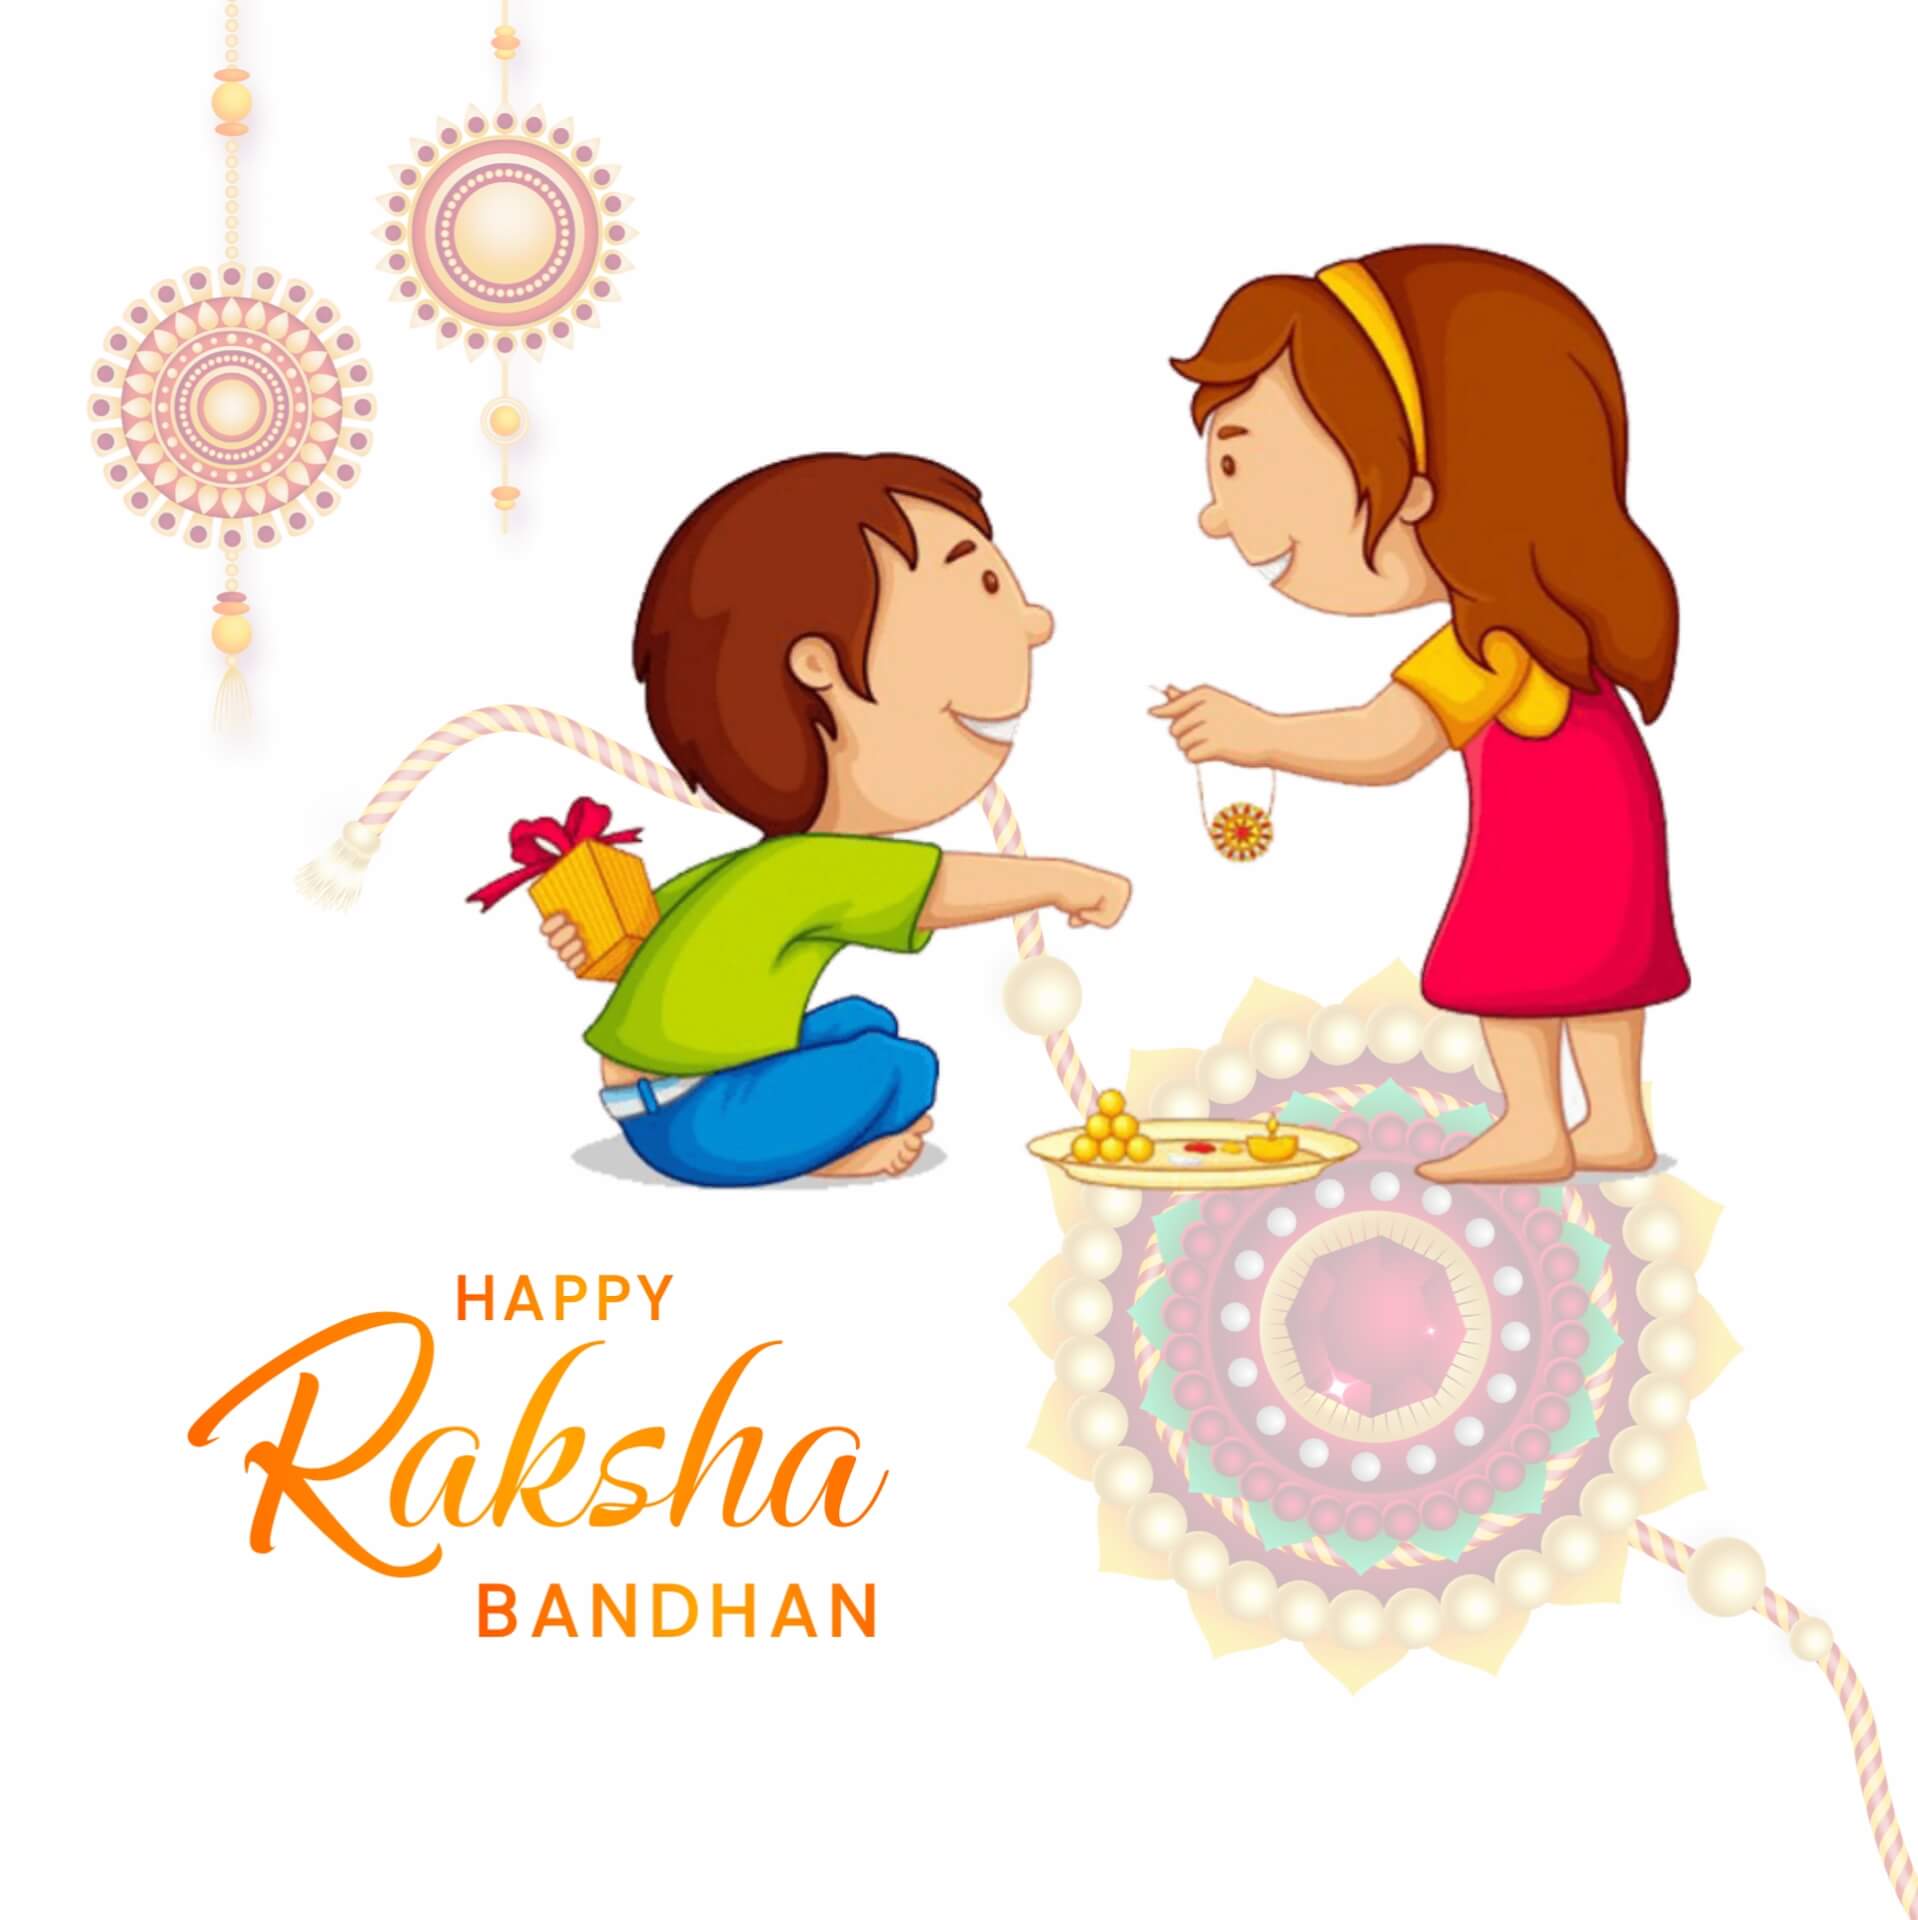 1084+ Best Happy Raksha Bandhan Images, Photos & Pictures